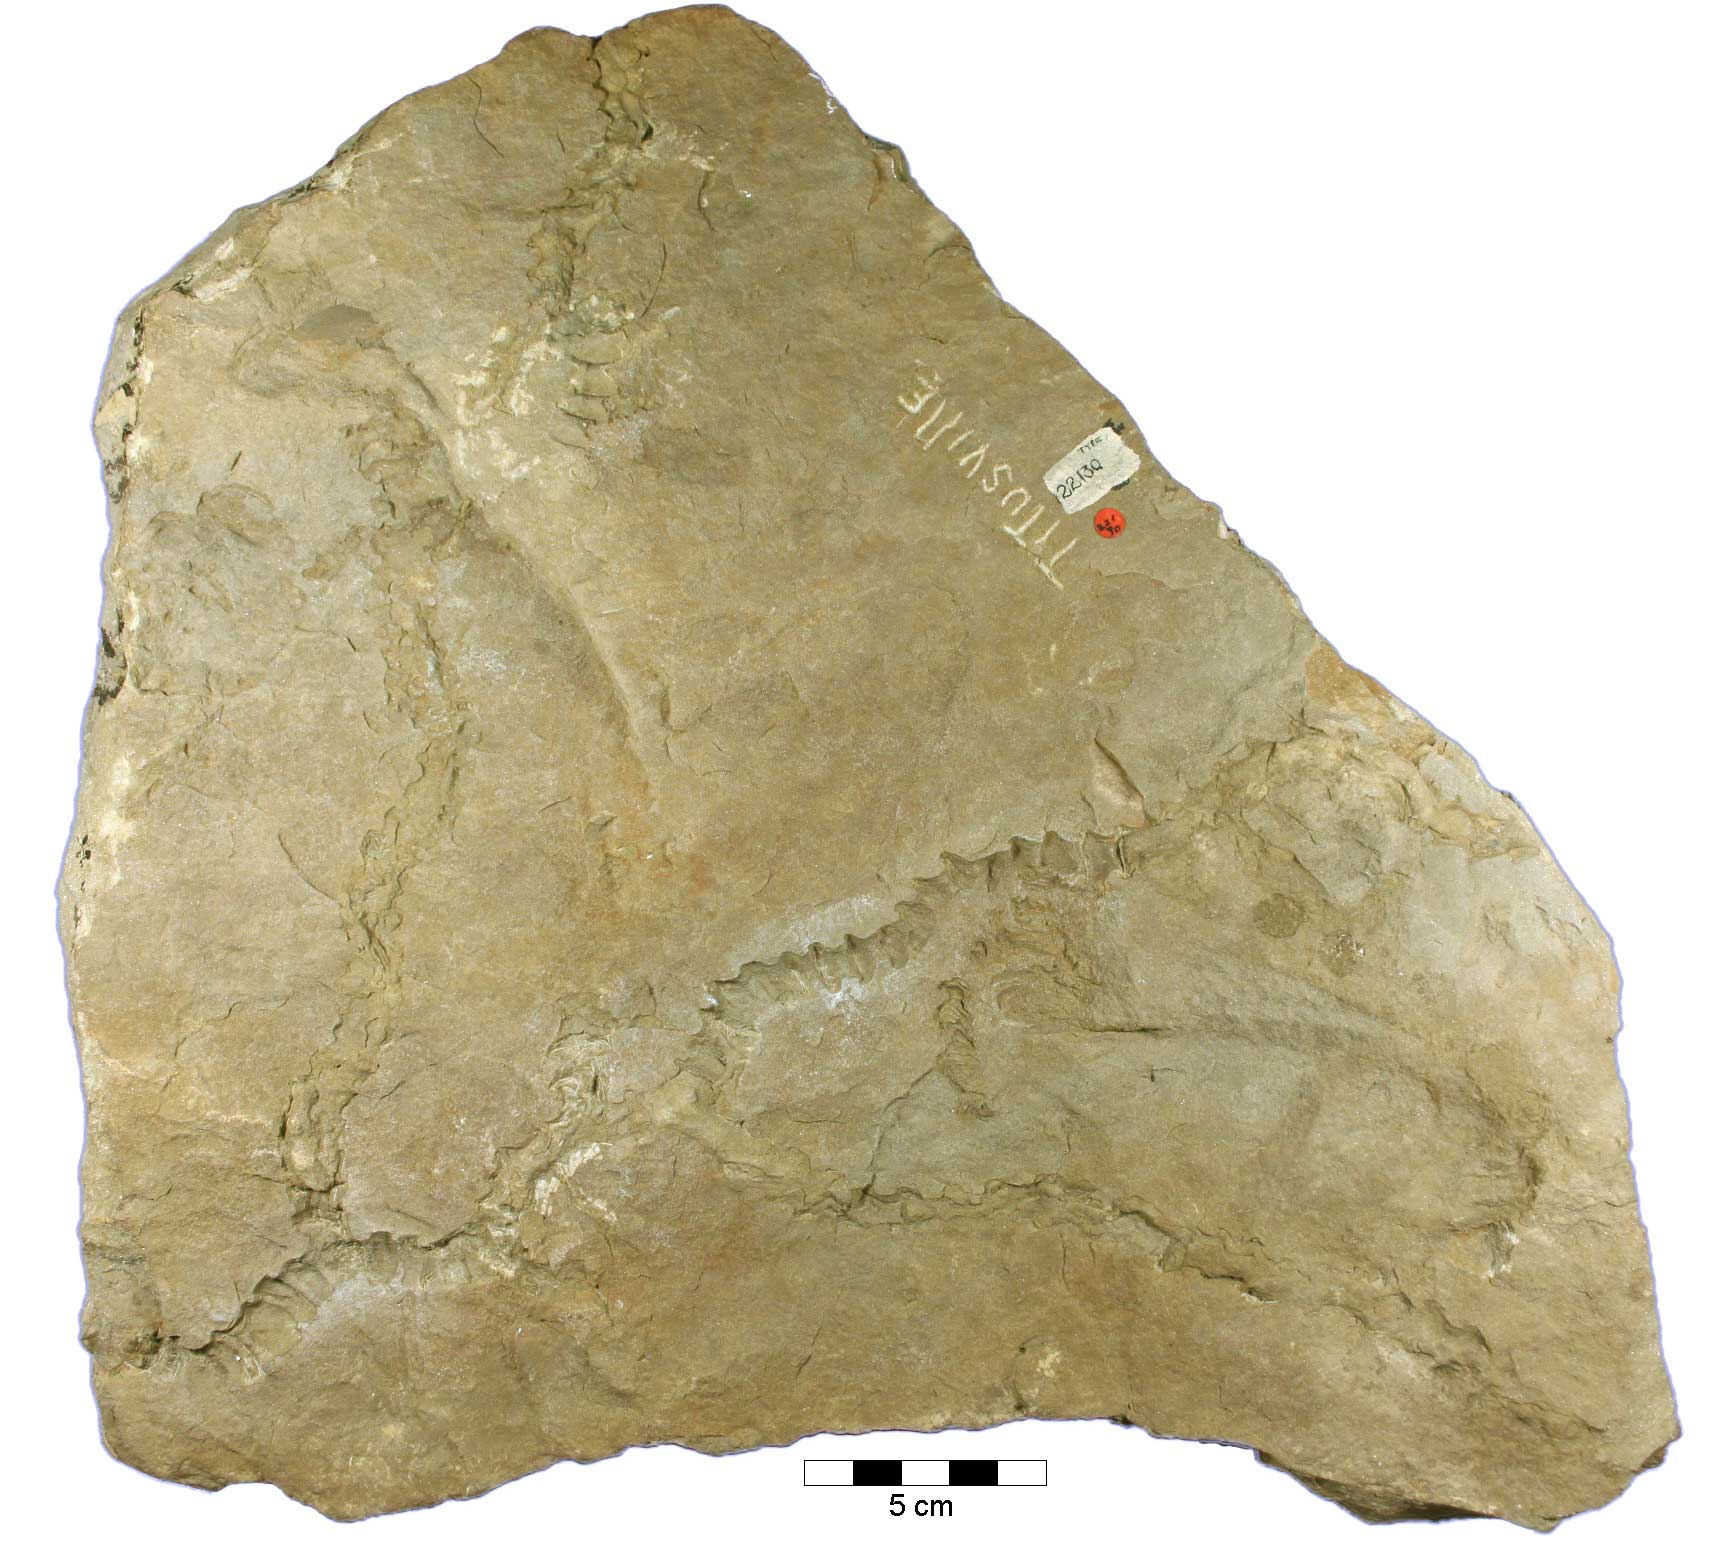 Photograph of the Devonian branching glass sponge Titusvillia drakei.